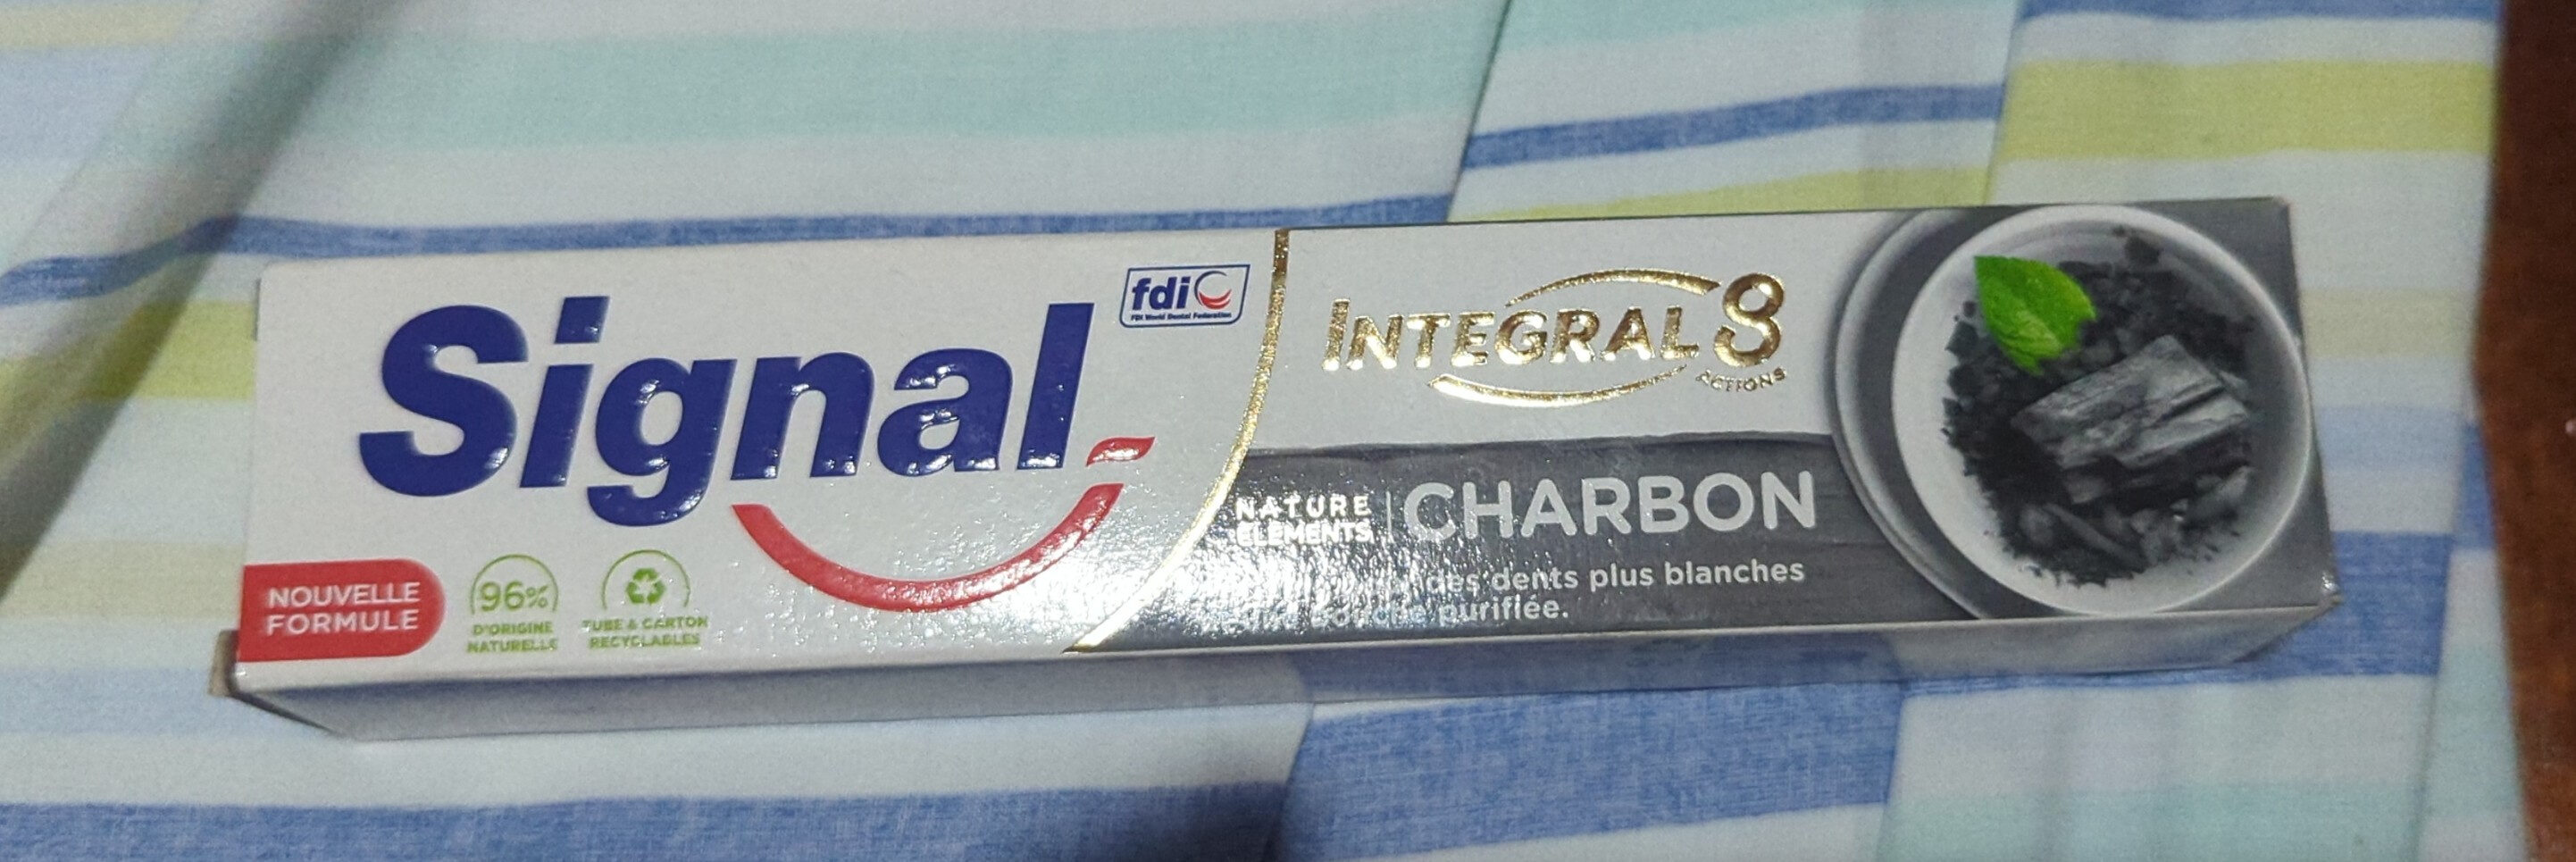 SIGNAL Dentifrice Integral 8 Nature Elements Charbon 75ml - Product - en